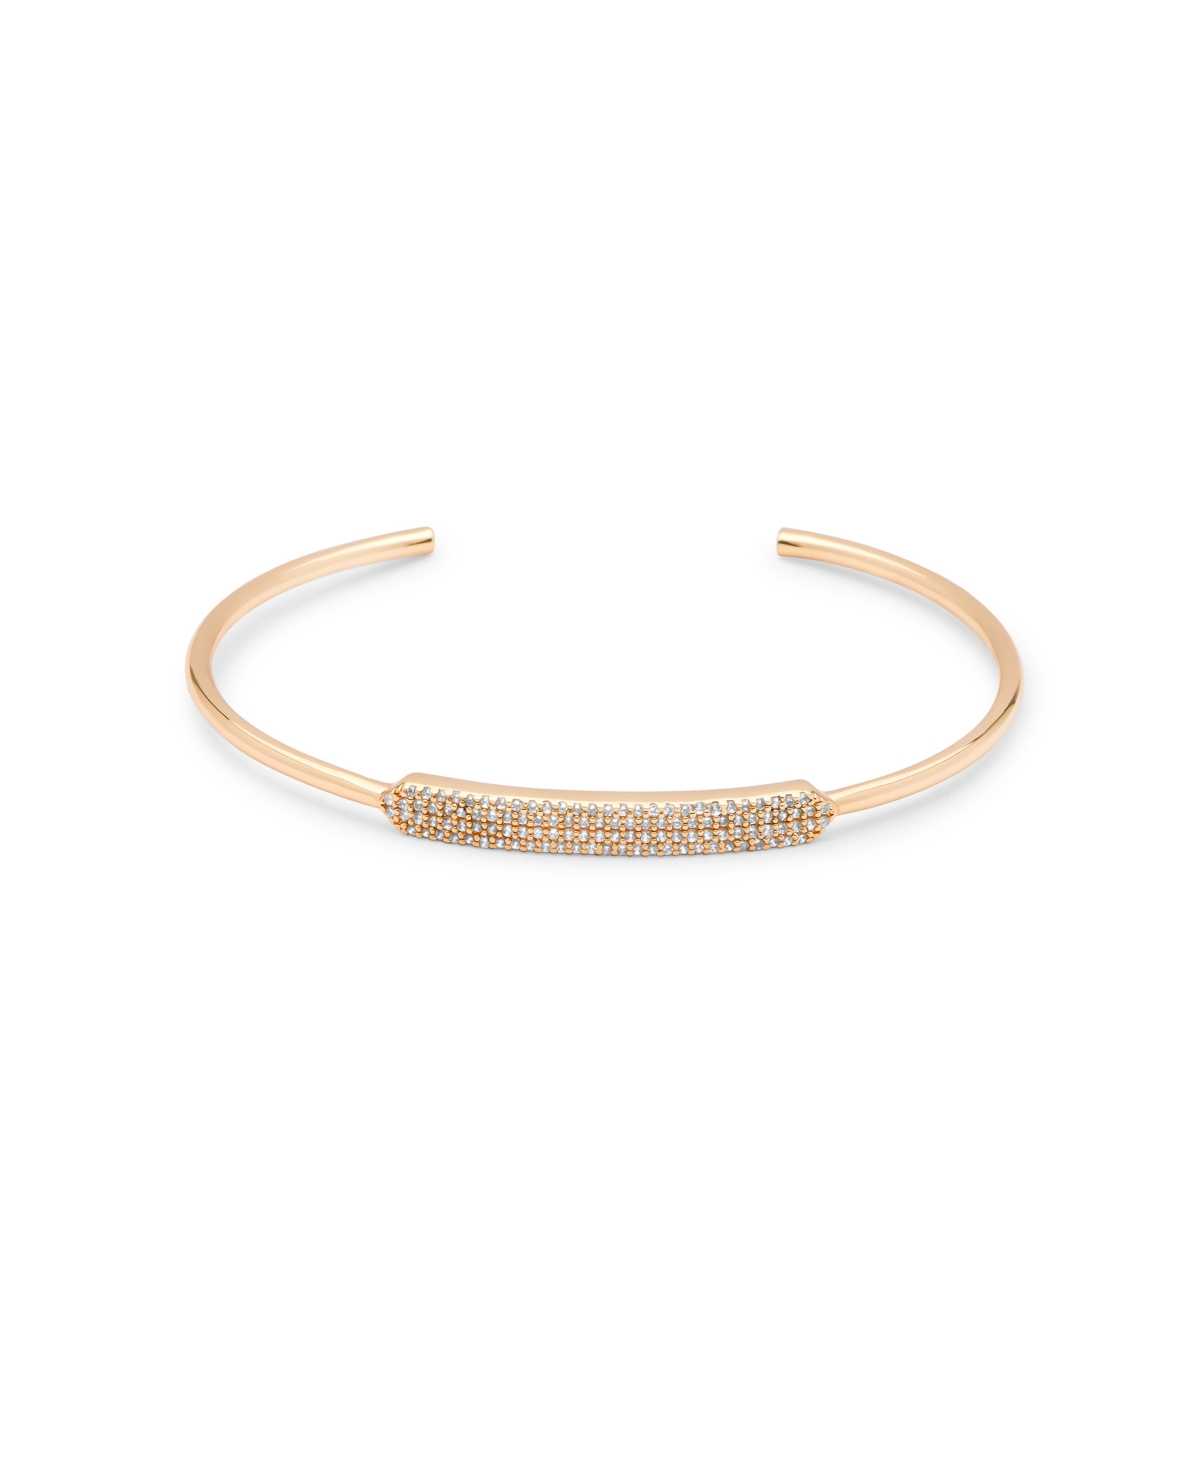 Crystal Pop 18k Gold Plated Cuff Bracelet - Gold